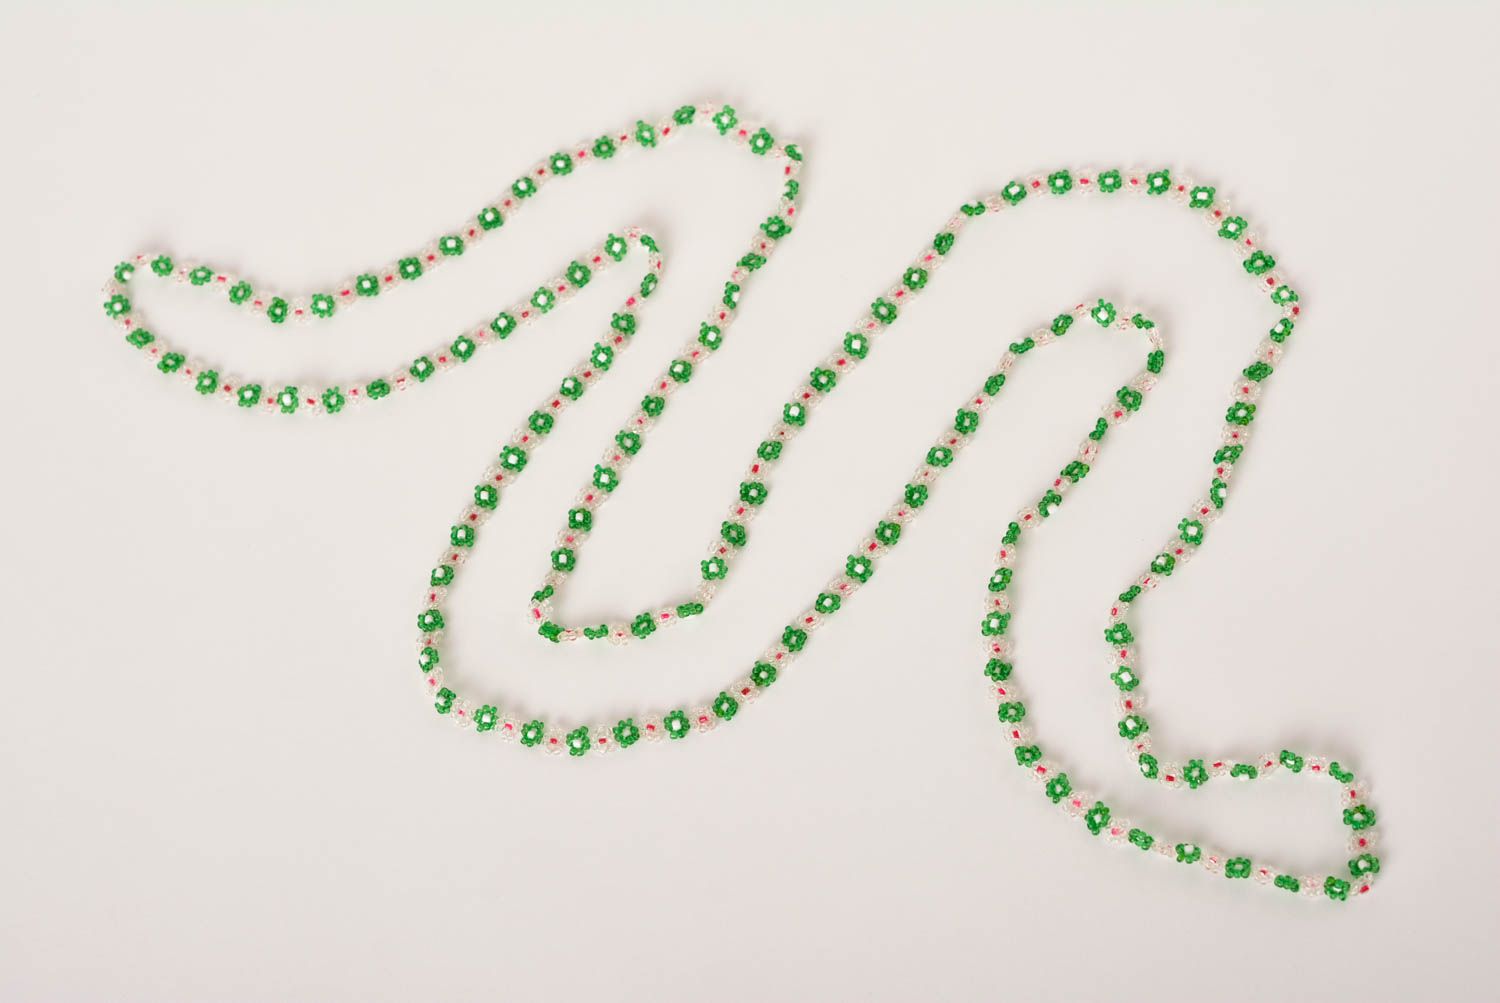 Stylish handmade beaded necklace cool jewelry designs bead weaving ideas photo 6